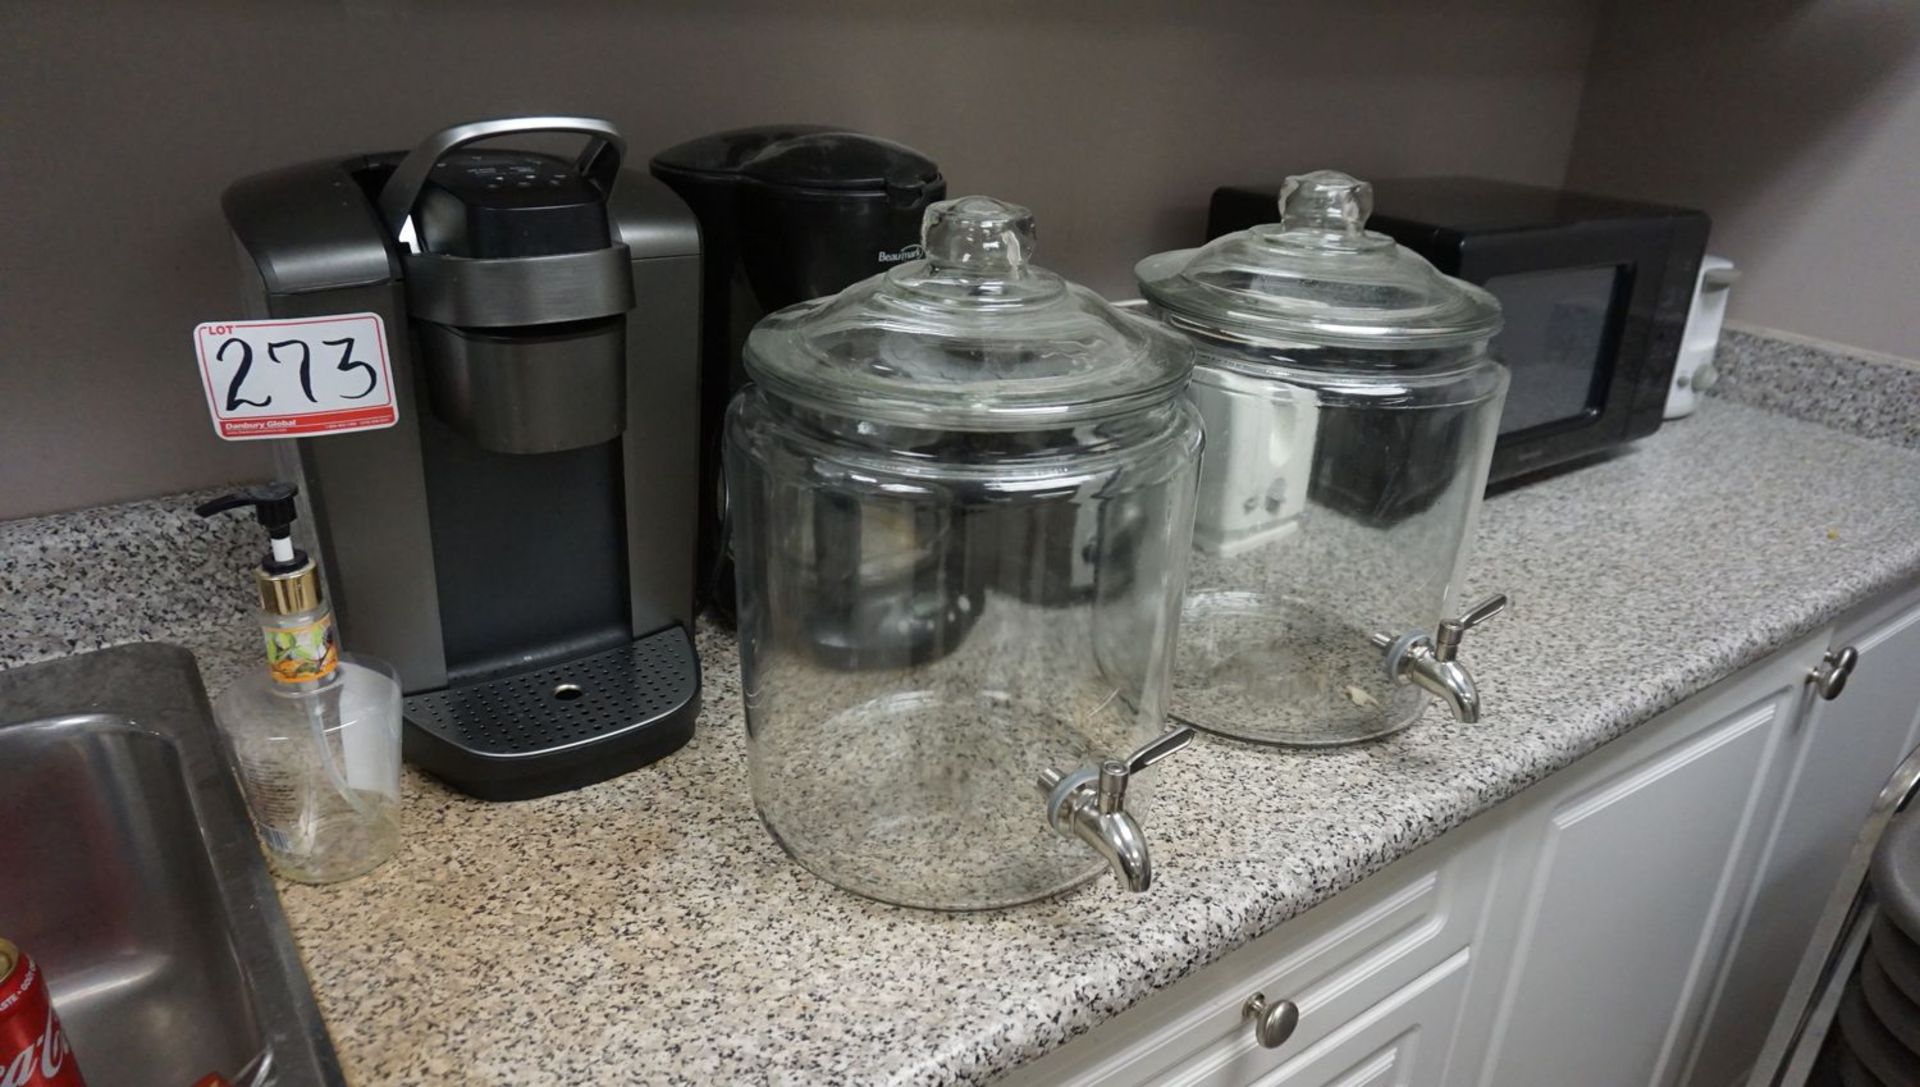 LOT - COFFEE & POD COFFEE MAKER, MICROWAVE, & GLASS BEVERAGE DISPENSERS